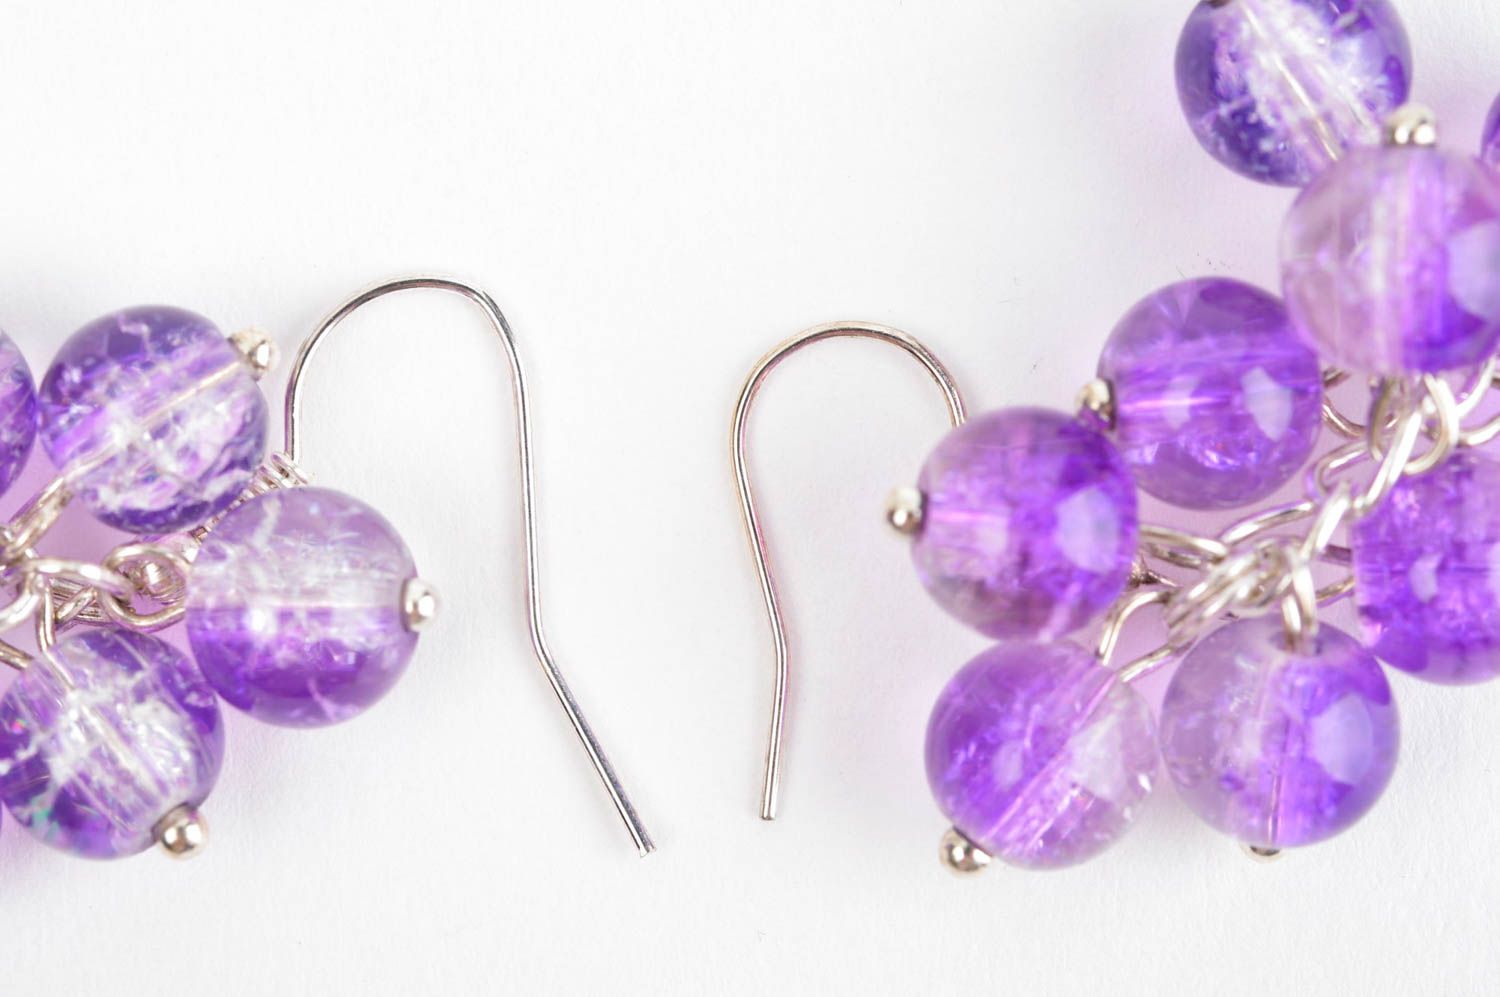 Handmade earrings designer accessory gift ideas unusual jewelry beads earrings photo 4